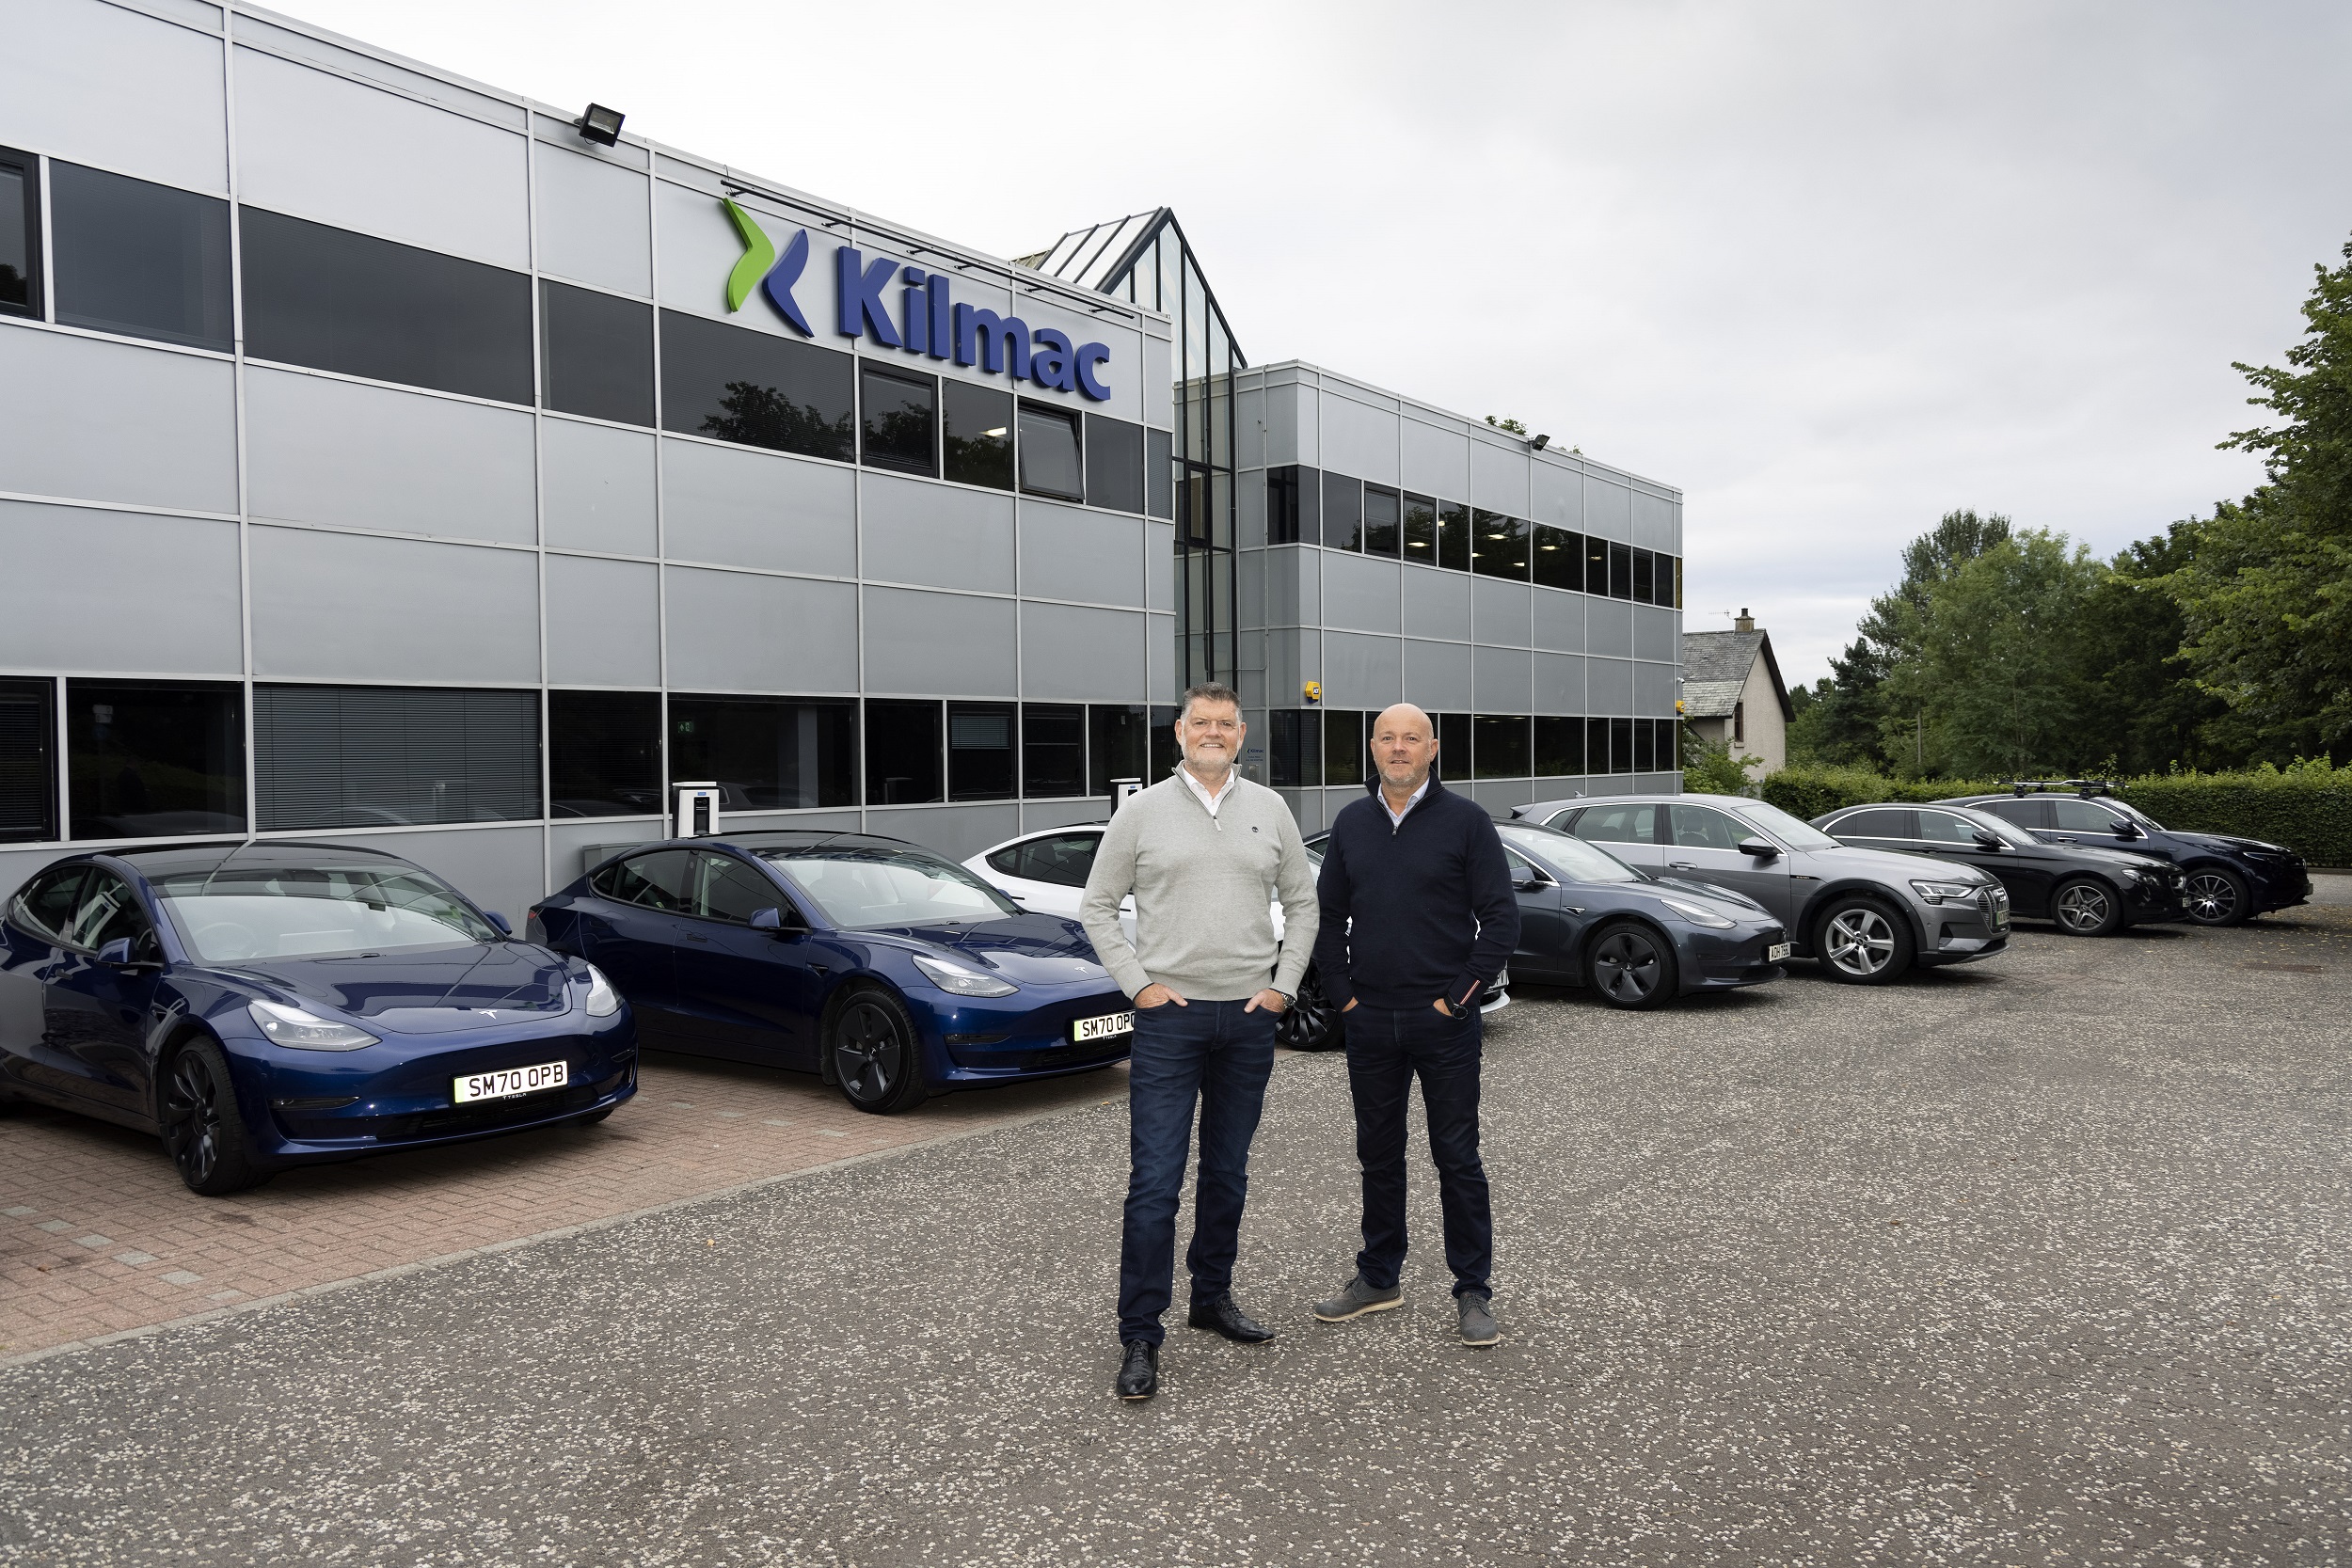 Kilmac heads for employee ownership